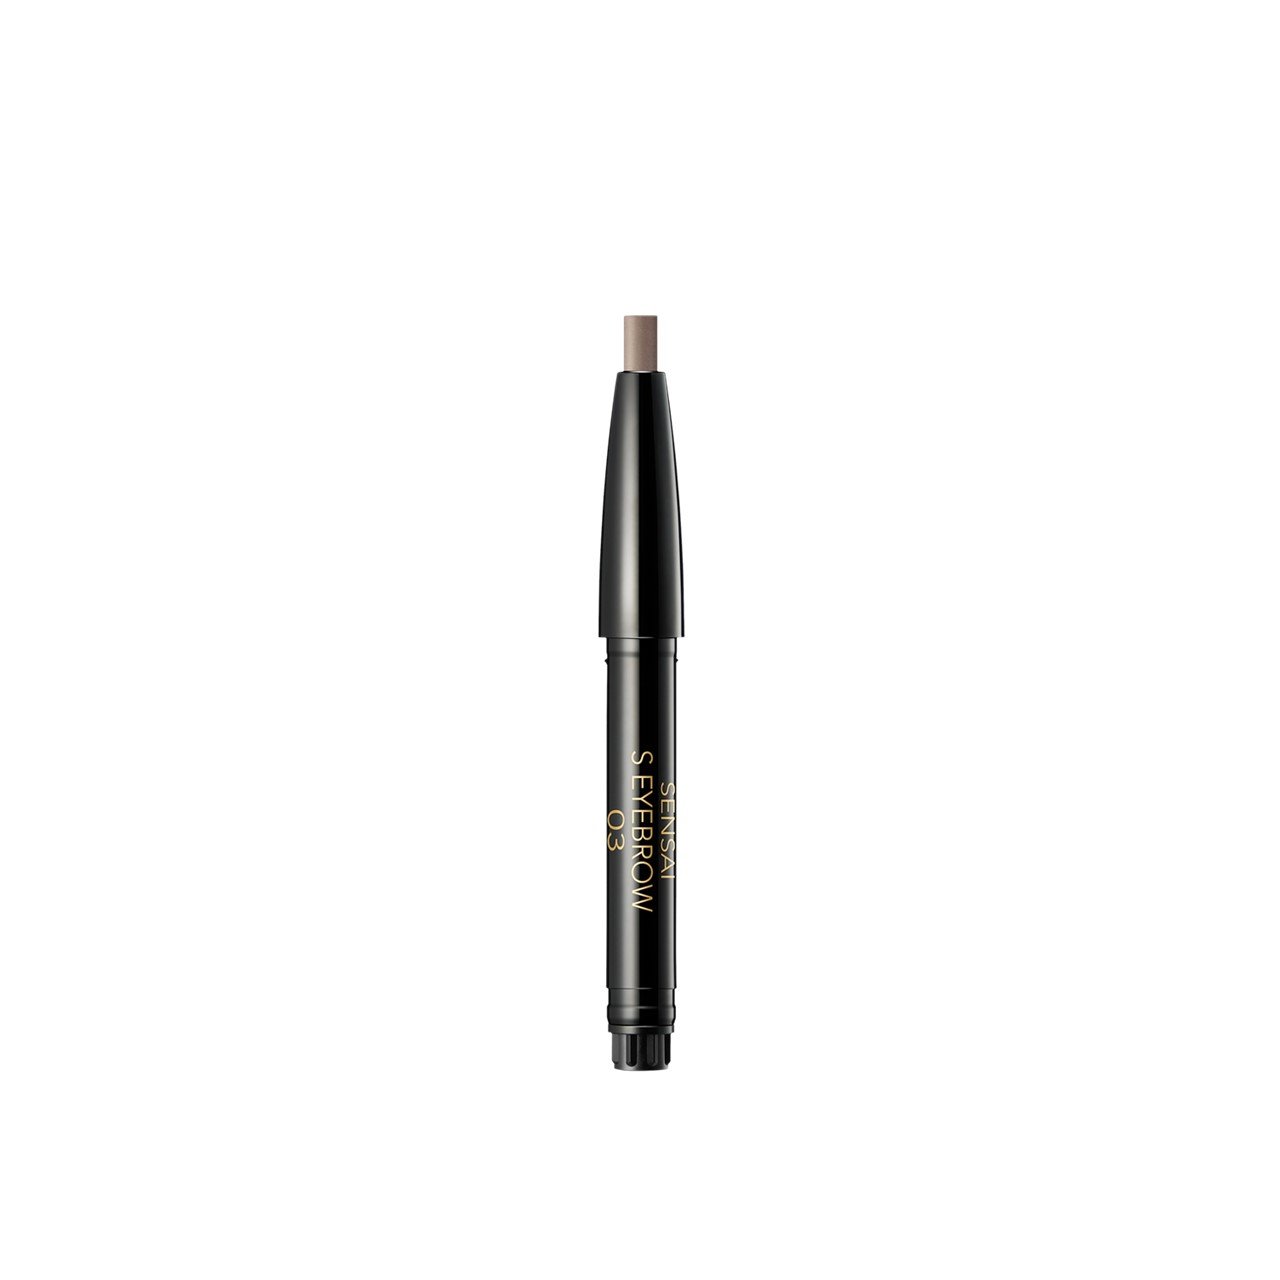 SENSAI Styling Eyebrow Pencil Refill 03 Taupe Brown 0.2g